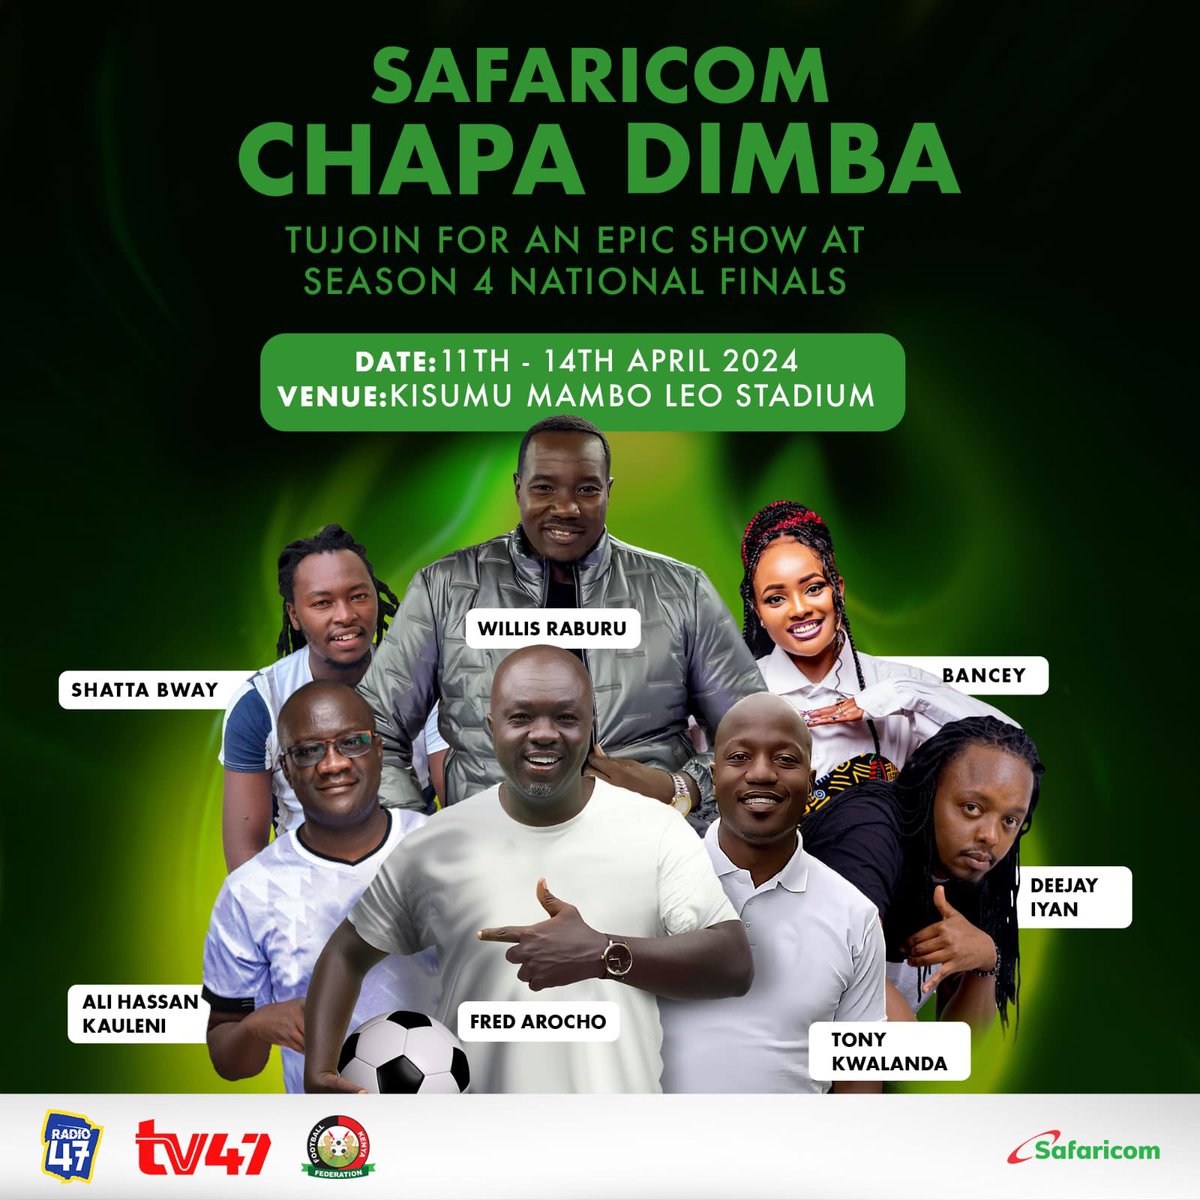 Kisumu we are coming🔥🔥⚽️SAFARICOM CHAPA DIMBA season4 National finals from 11th April-14th April at the Kisumu Mambo leo Stadium. Come cheer on your favorite teams🥳mambo itakua live live 🔥🔥 @SafaricomPLC #chapadimbanasafaricom